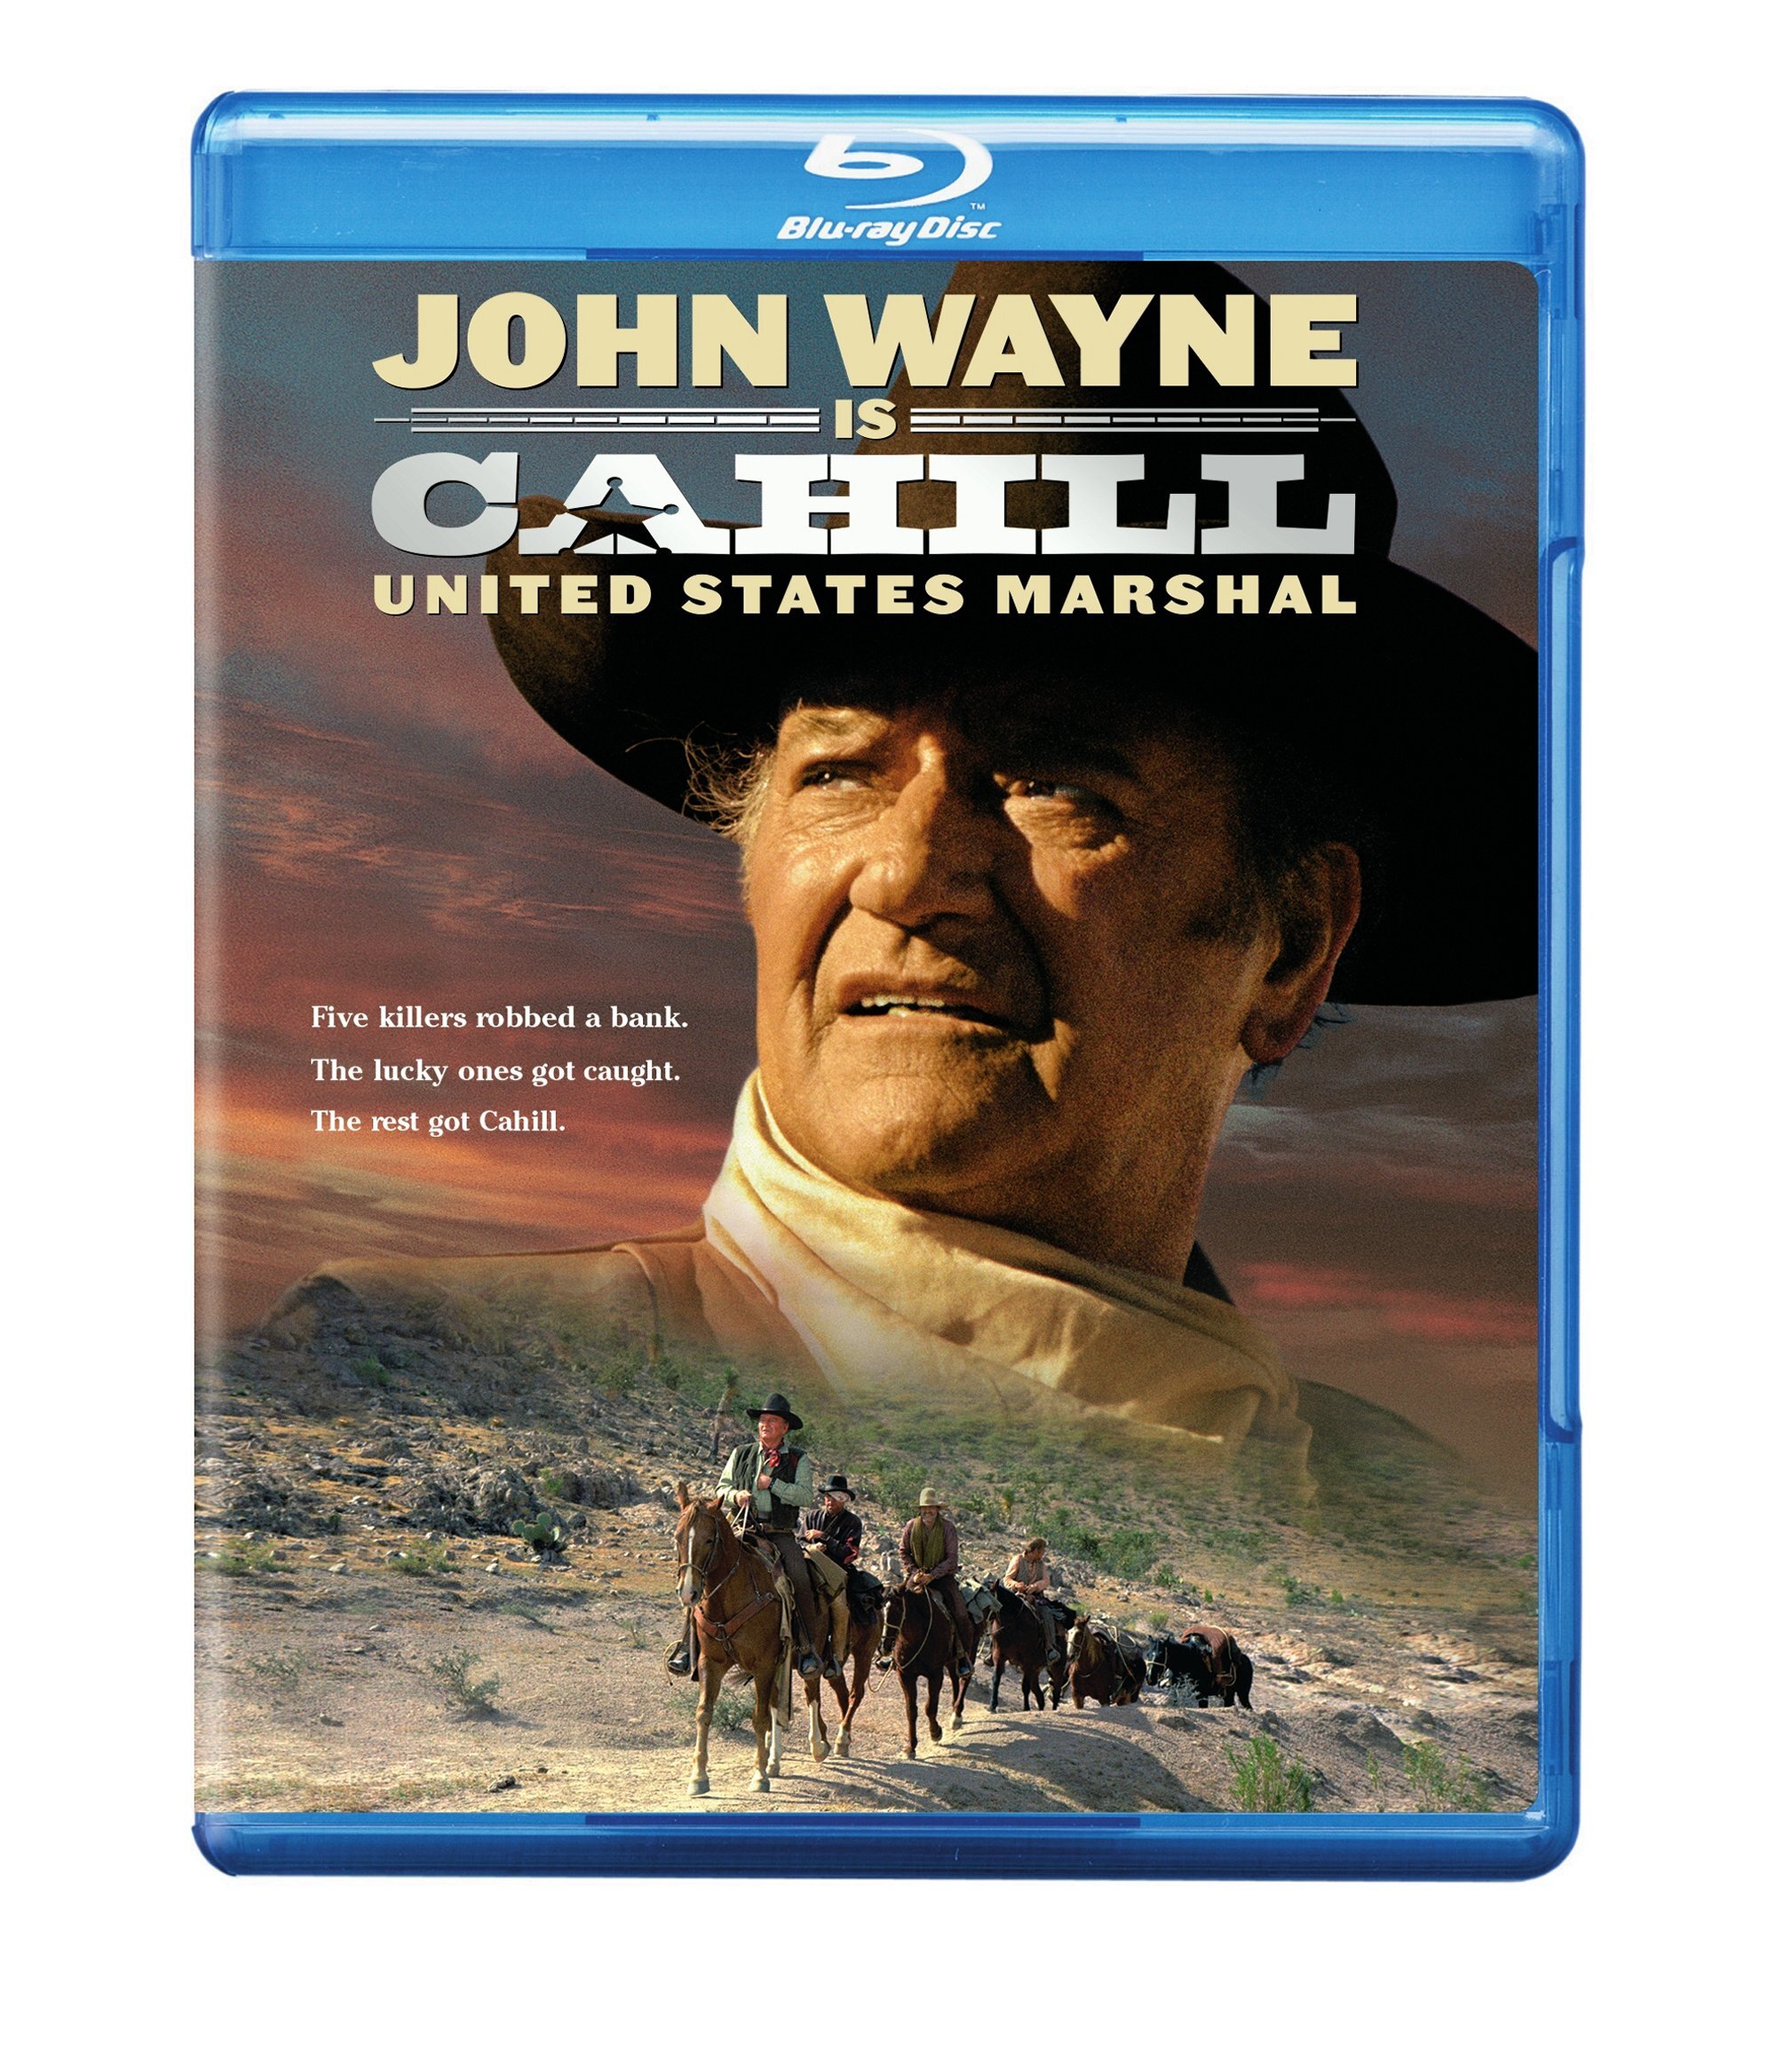 Cahill - US Marshal - Blu-ray [ 1973 ]  - Western Movies On Blu-ray - Movies On GRUV